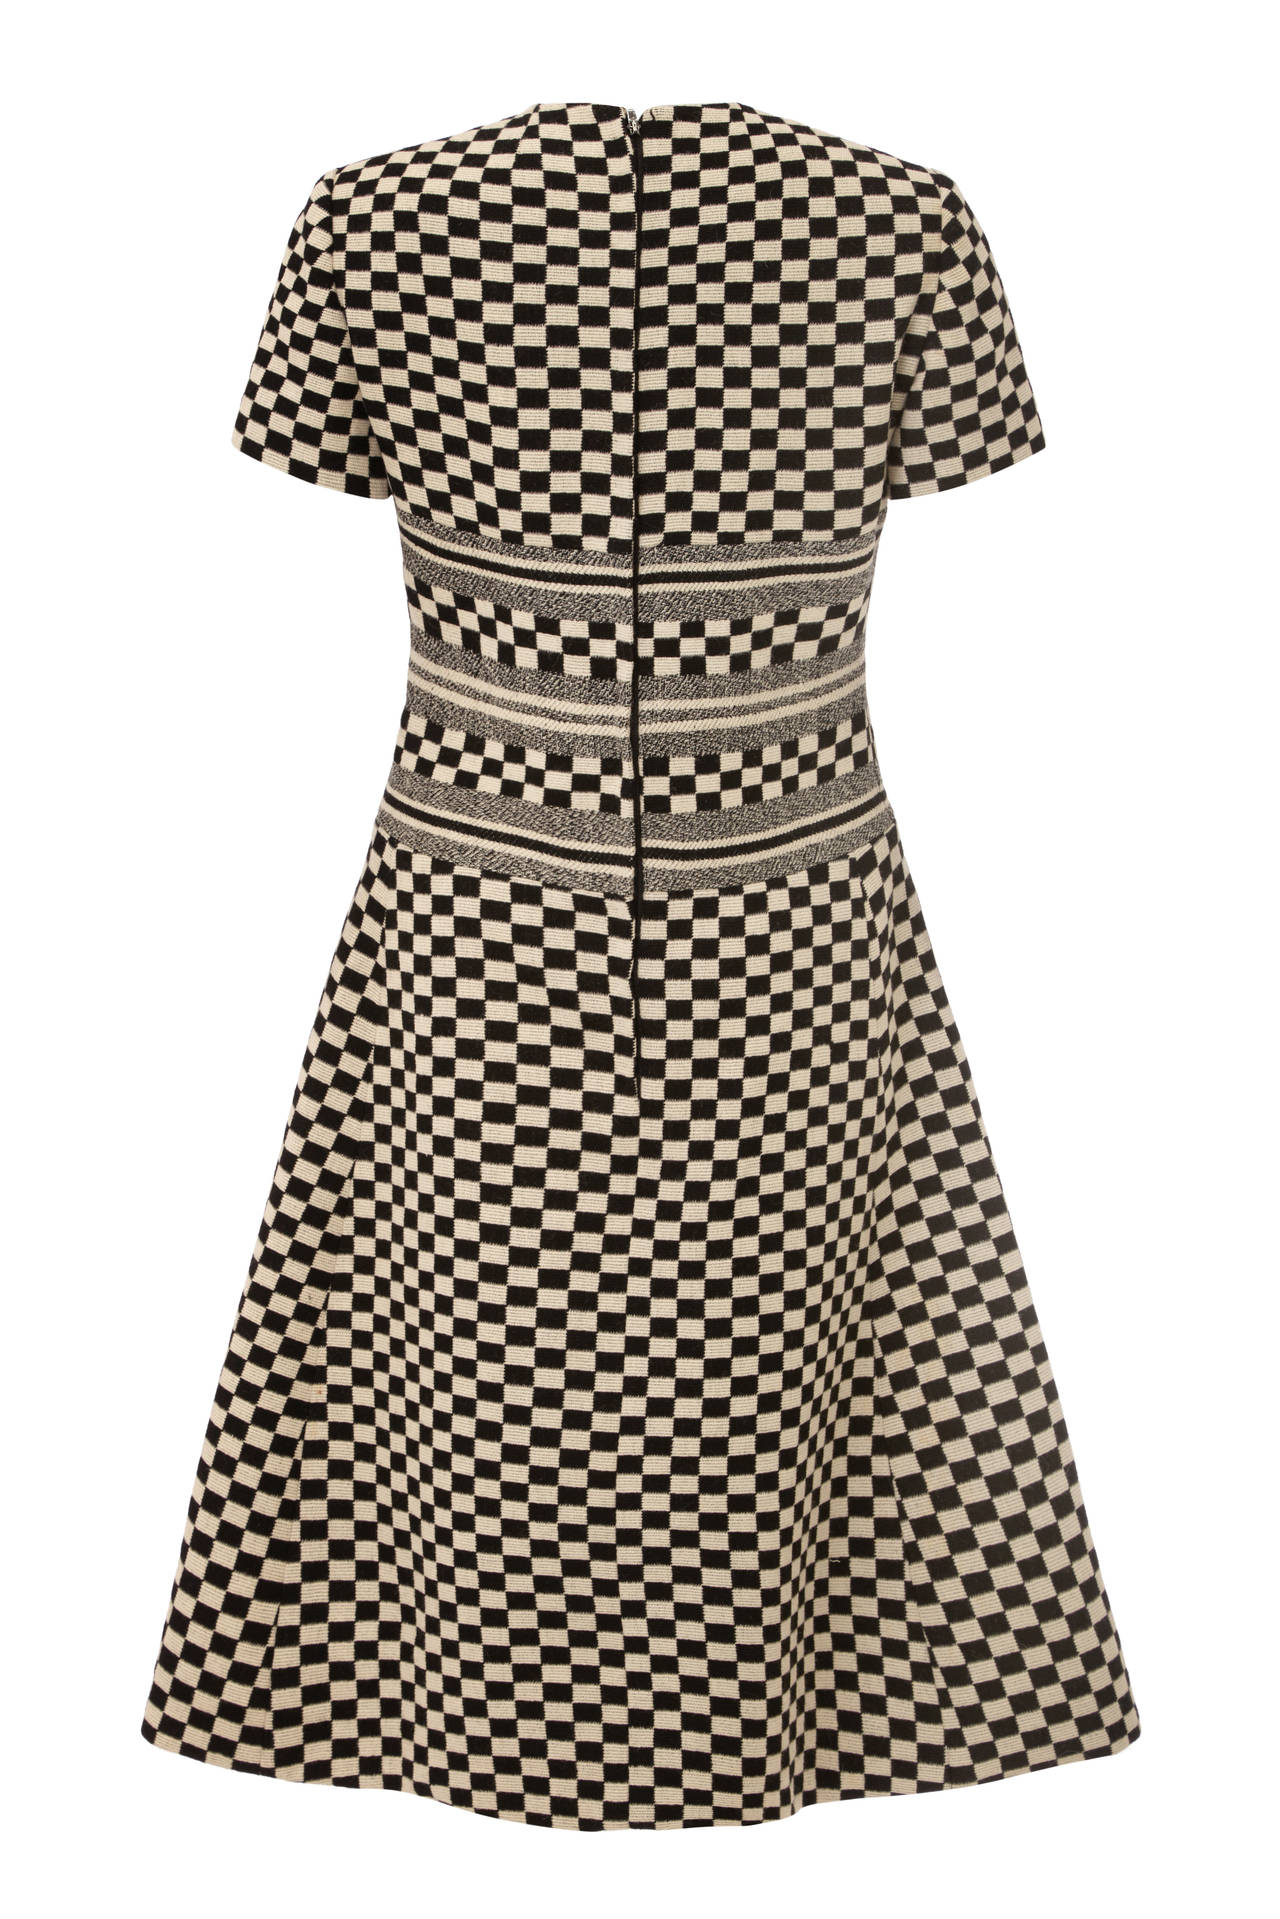 1960s Christian Dior Monochrome Checked Mod Dress at 1stDibs